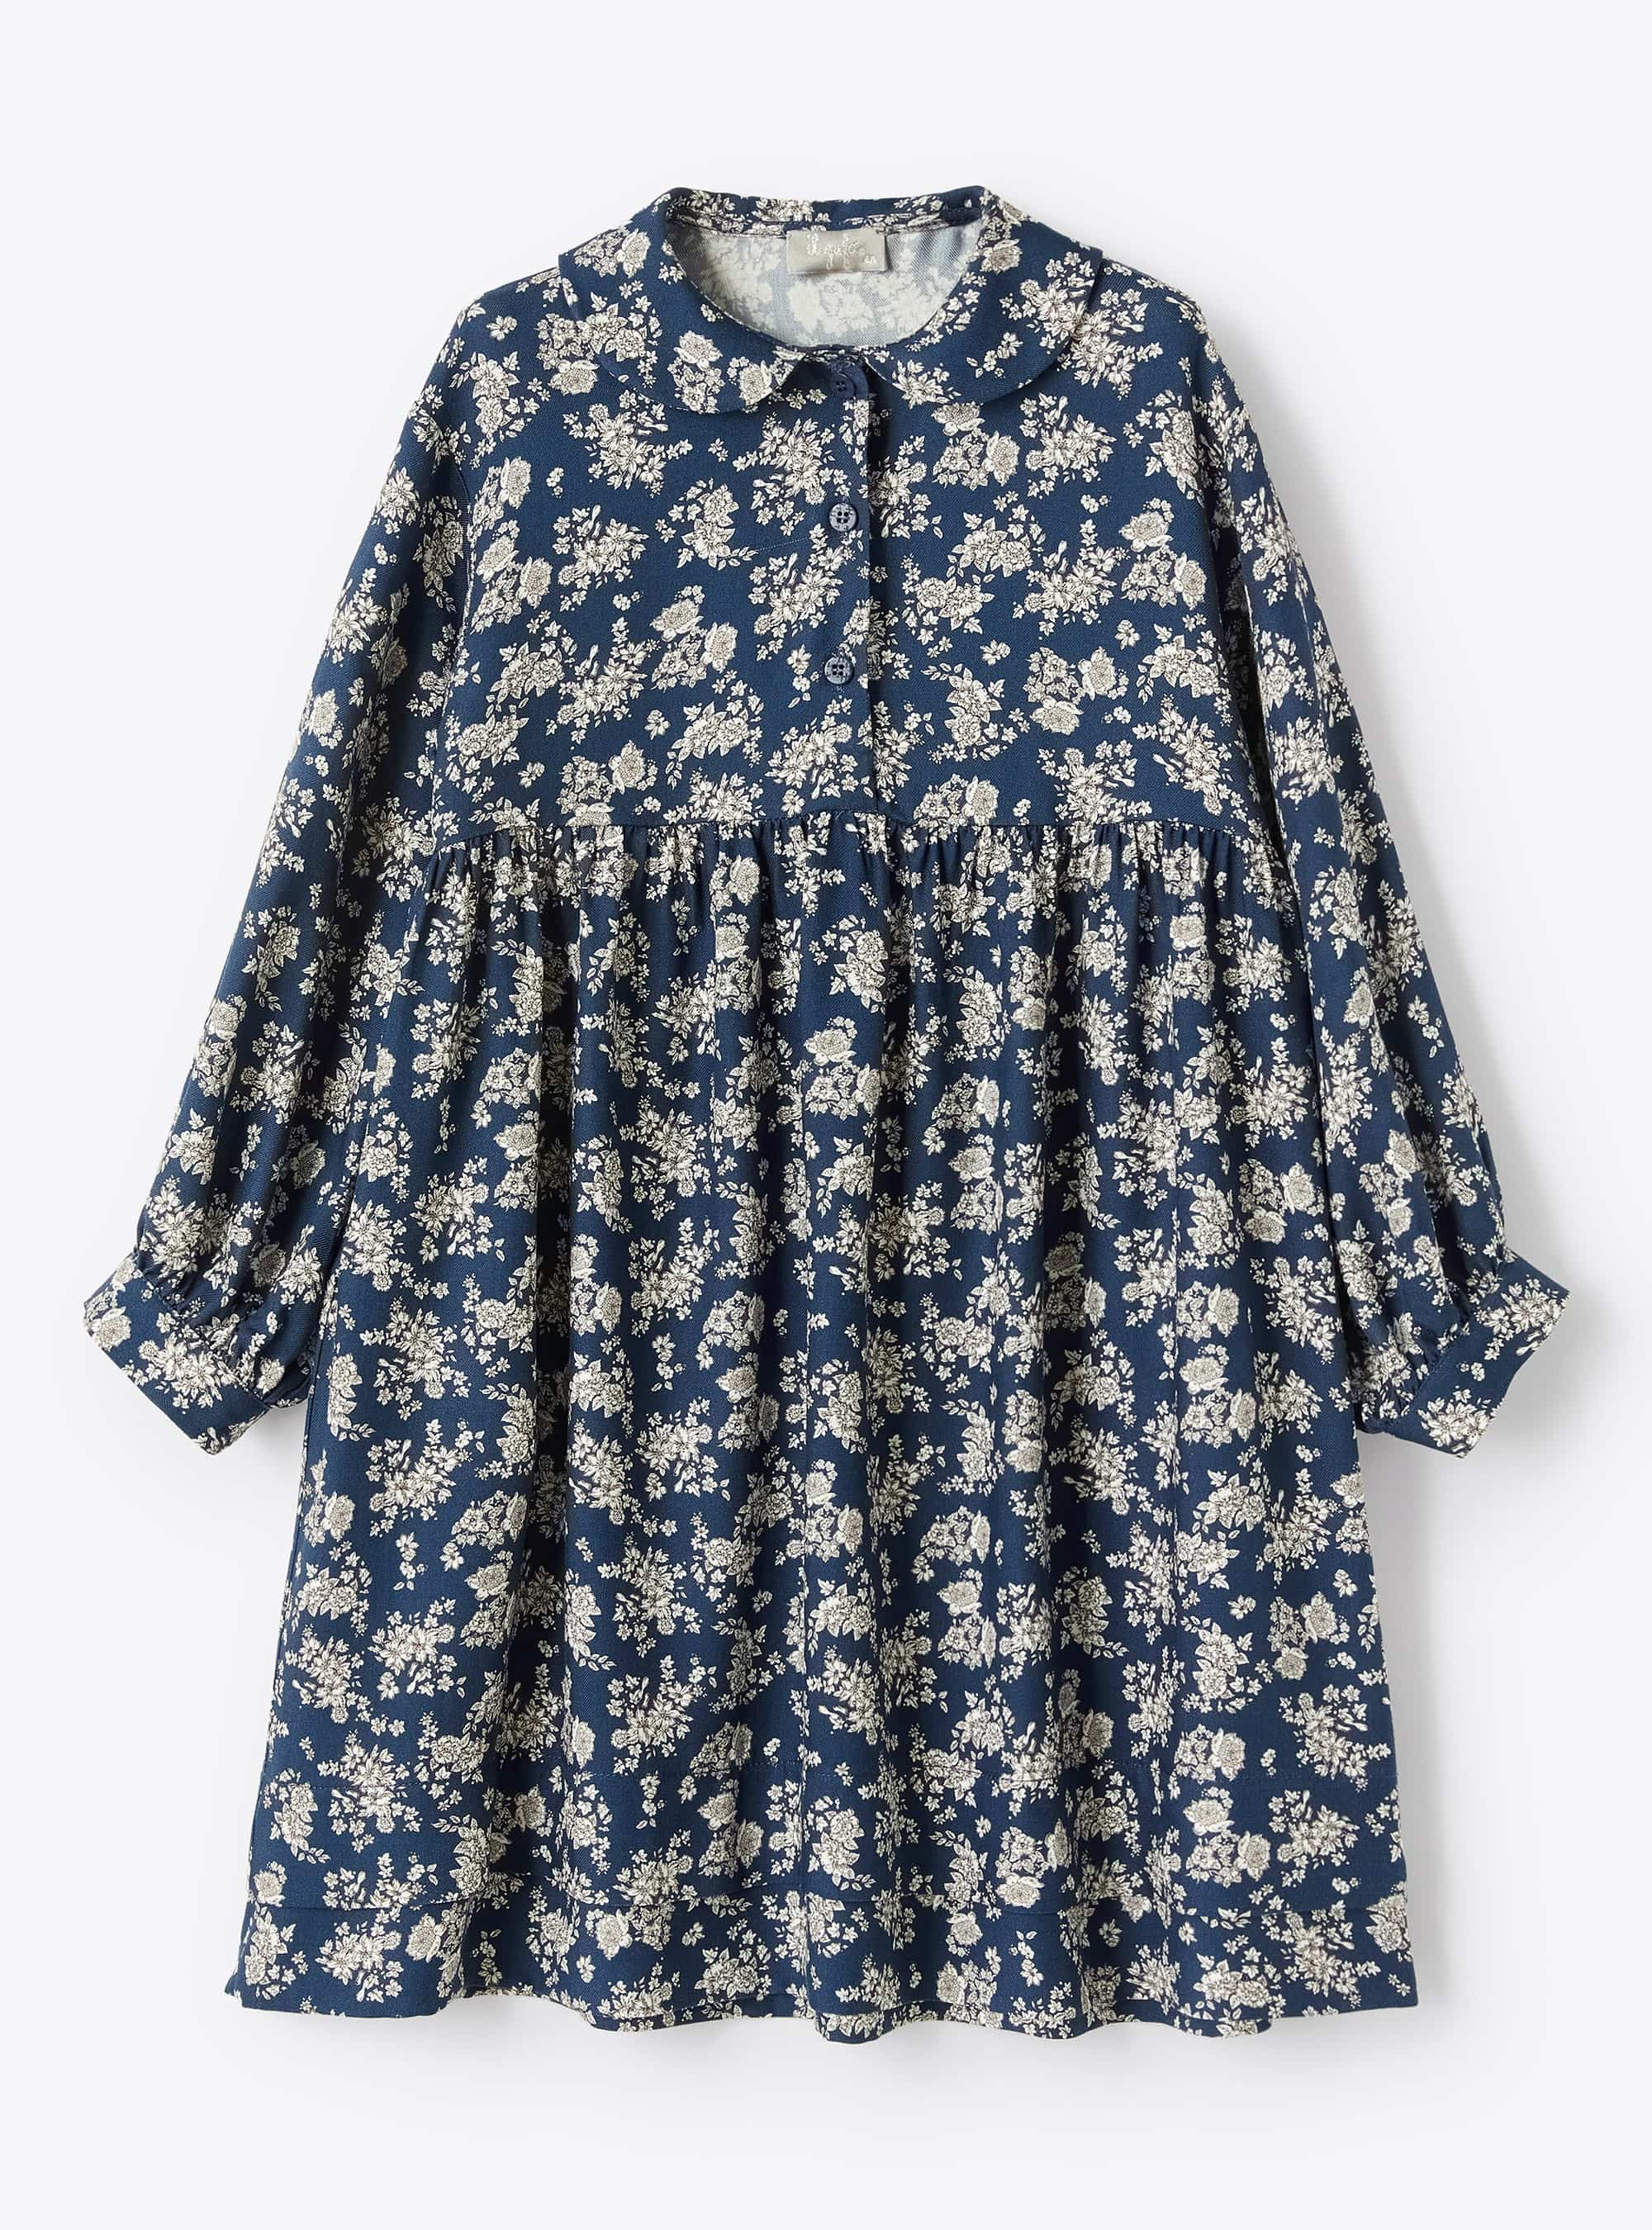 Floral print navy dress - Dresses - Il Gufo